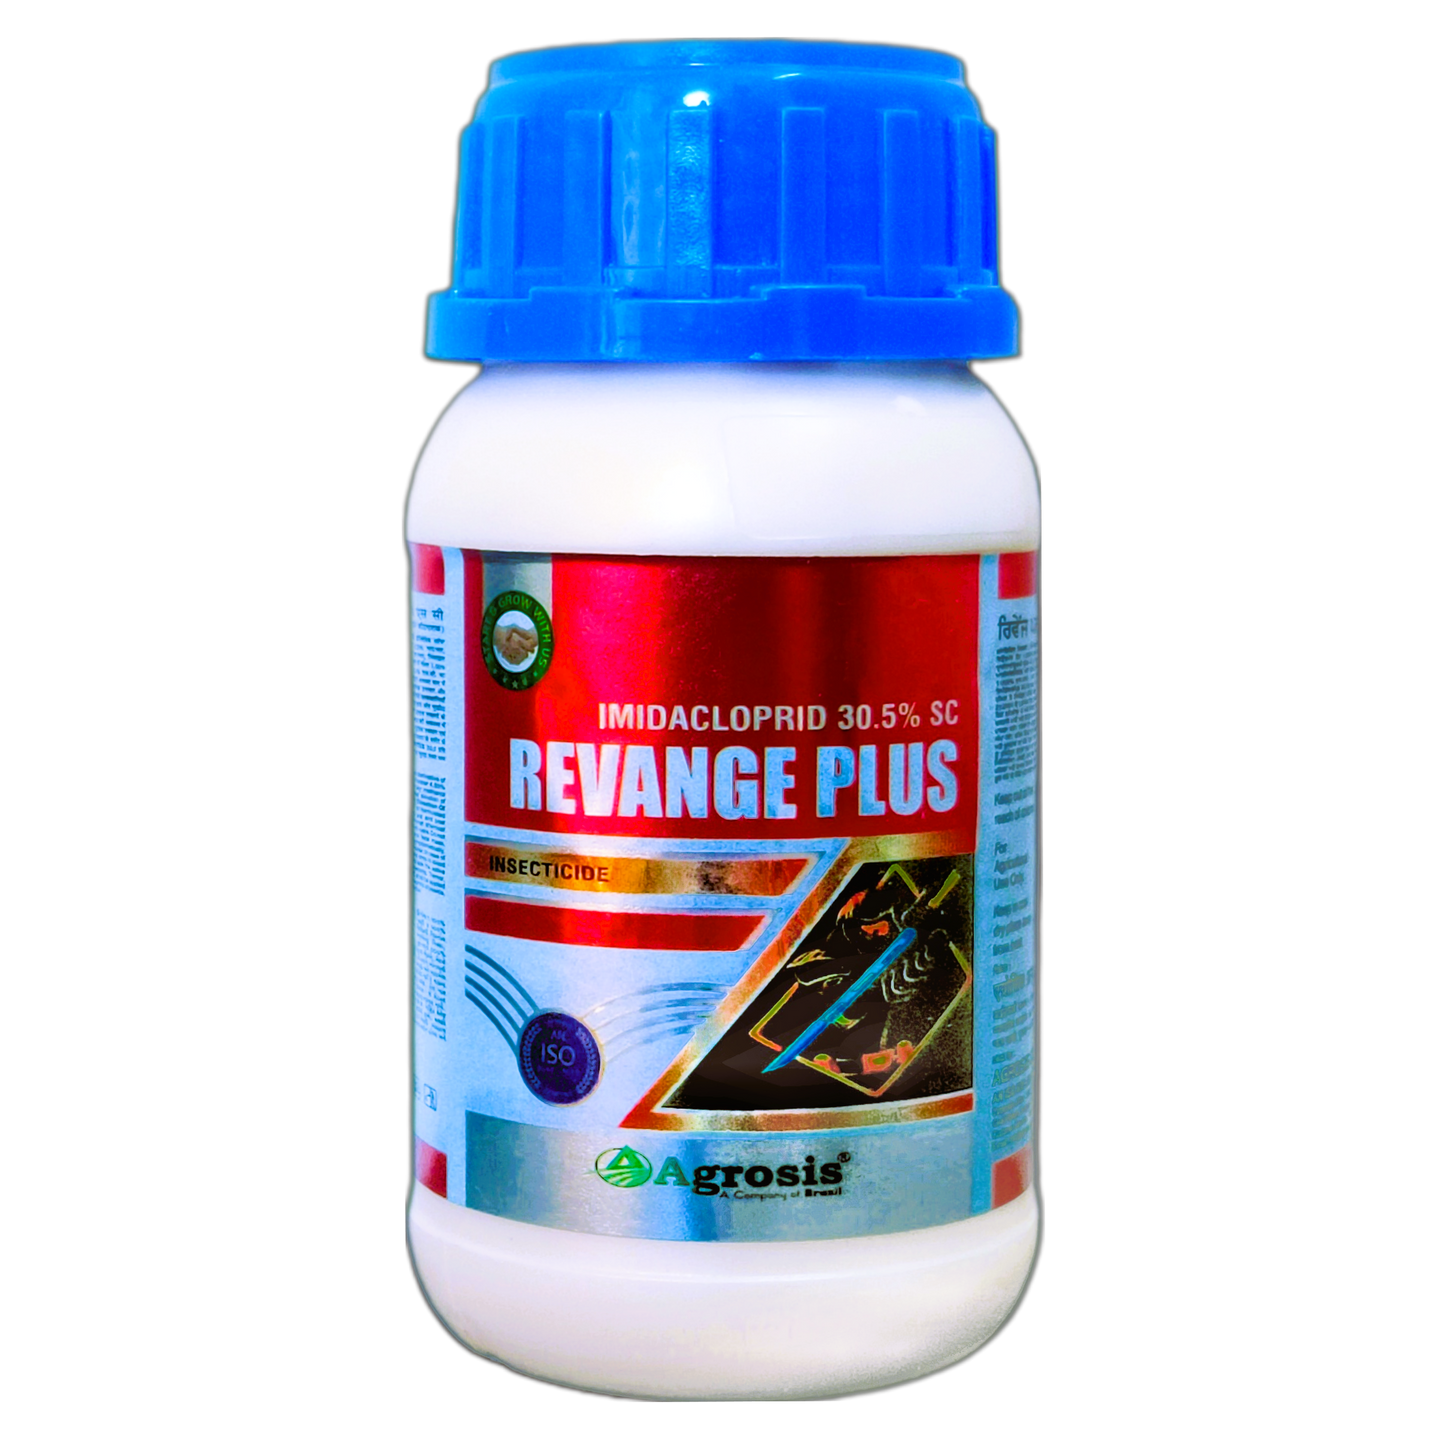 Revange Plus - Imidacloprid 30.5% SC Insecticide